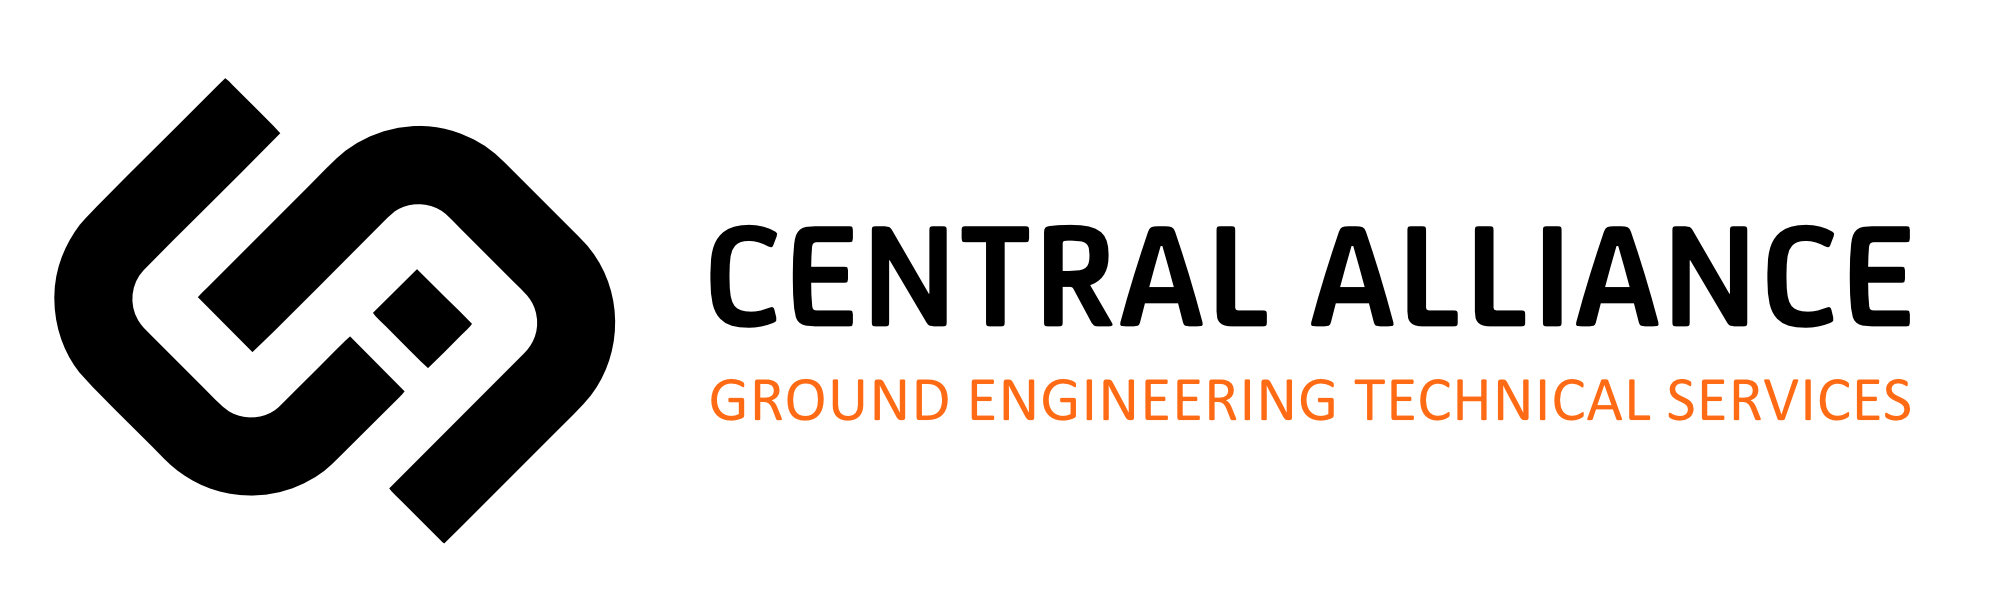 Central Alliance logo NEW